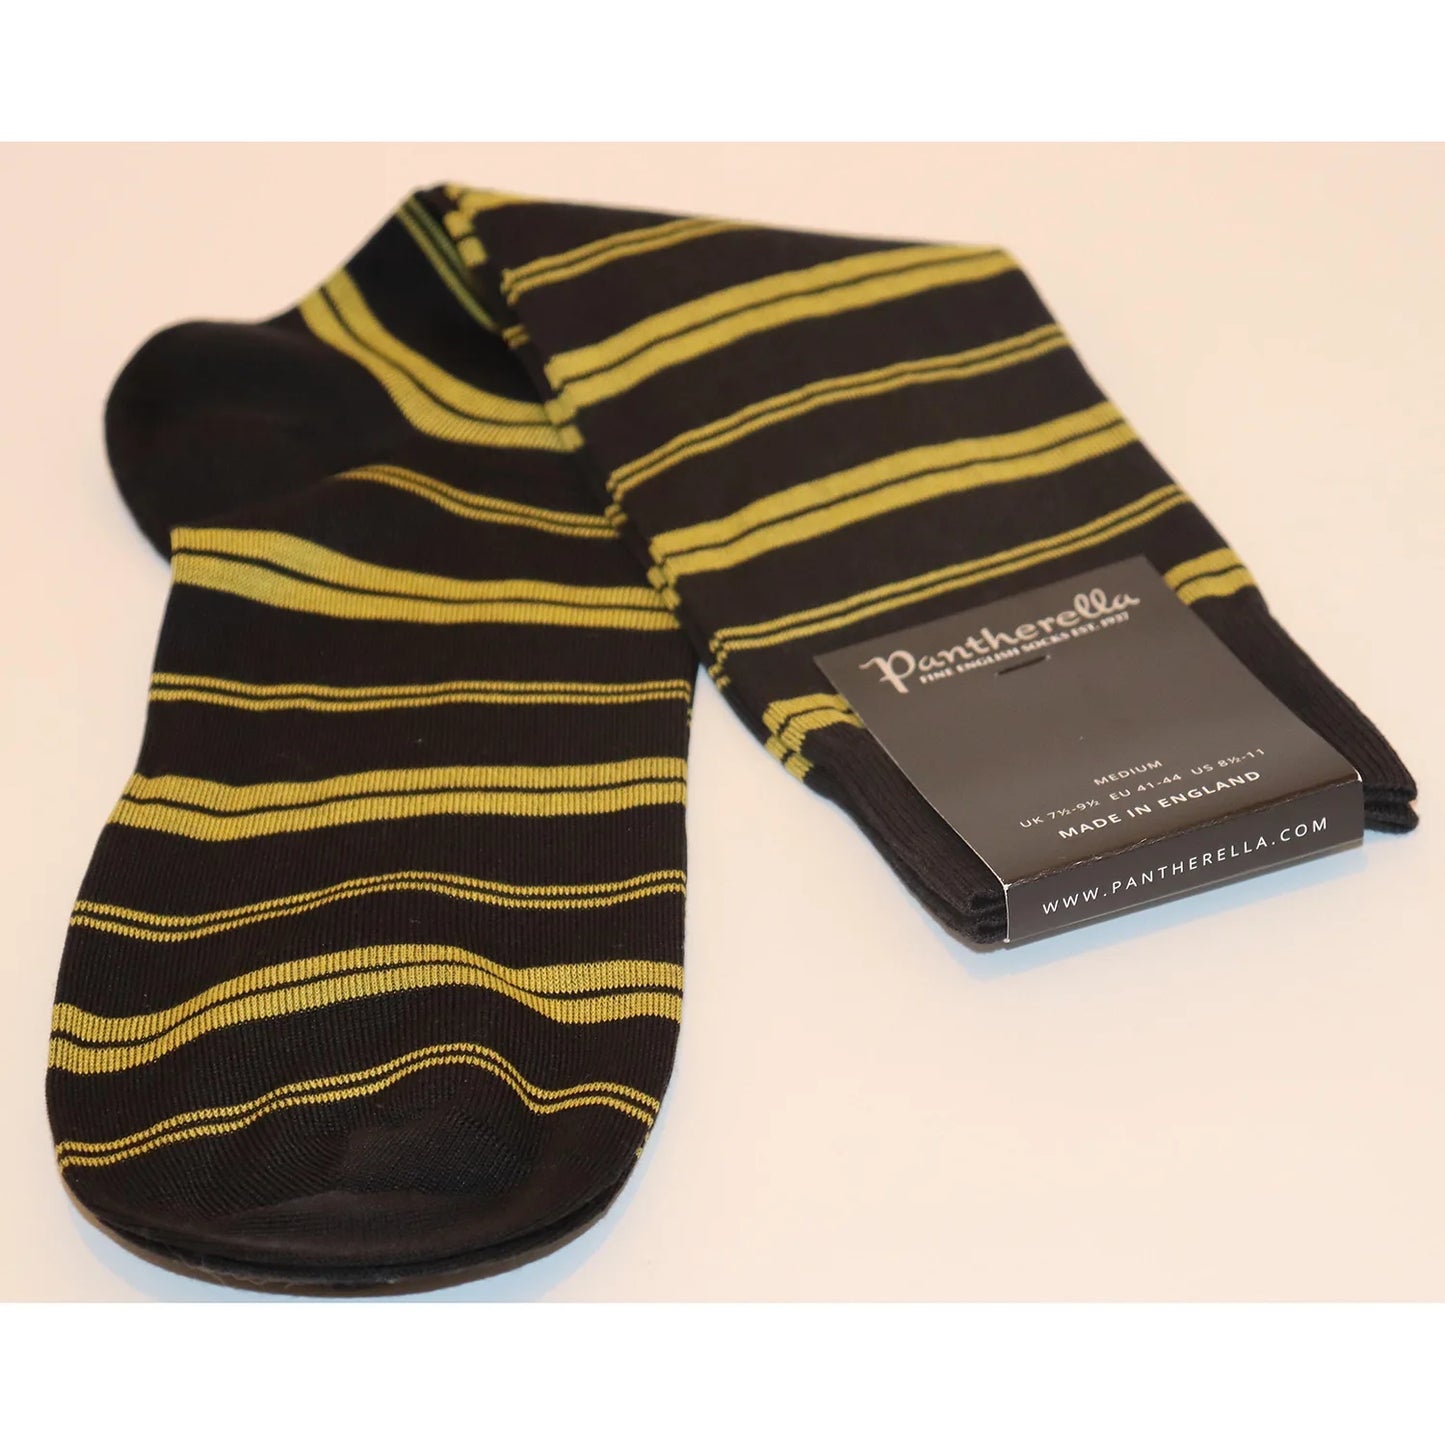 Pantherella Socks (Saba Charcoal)